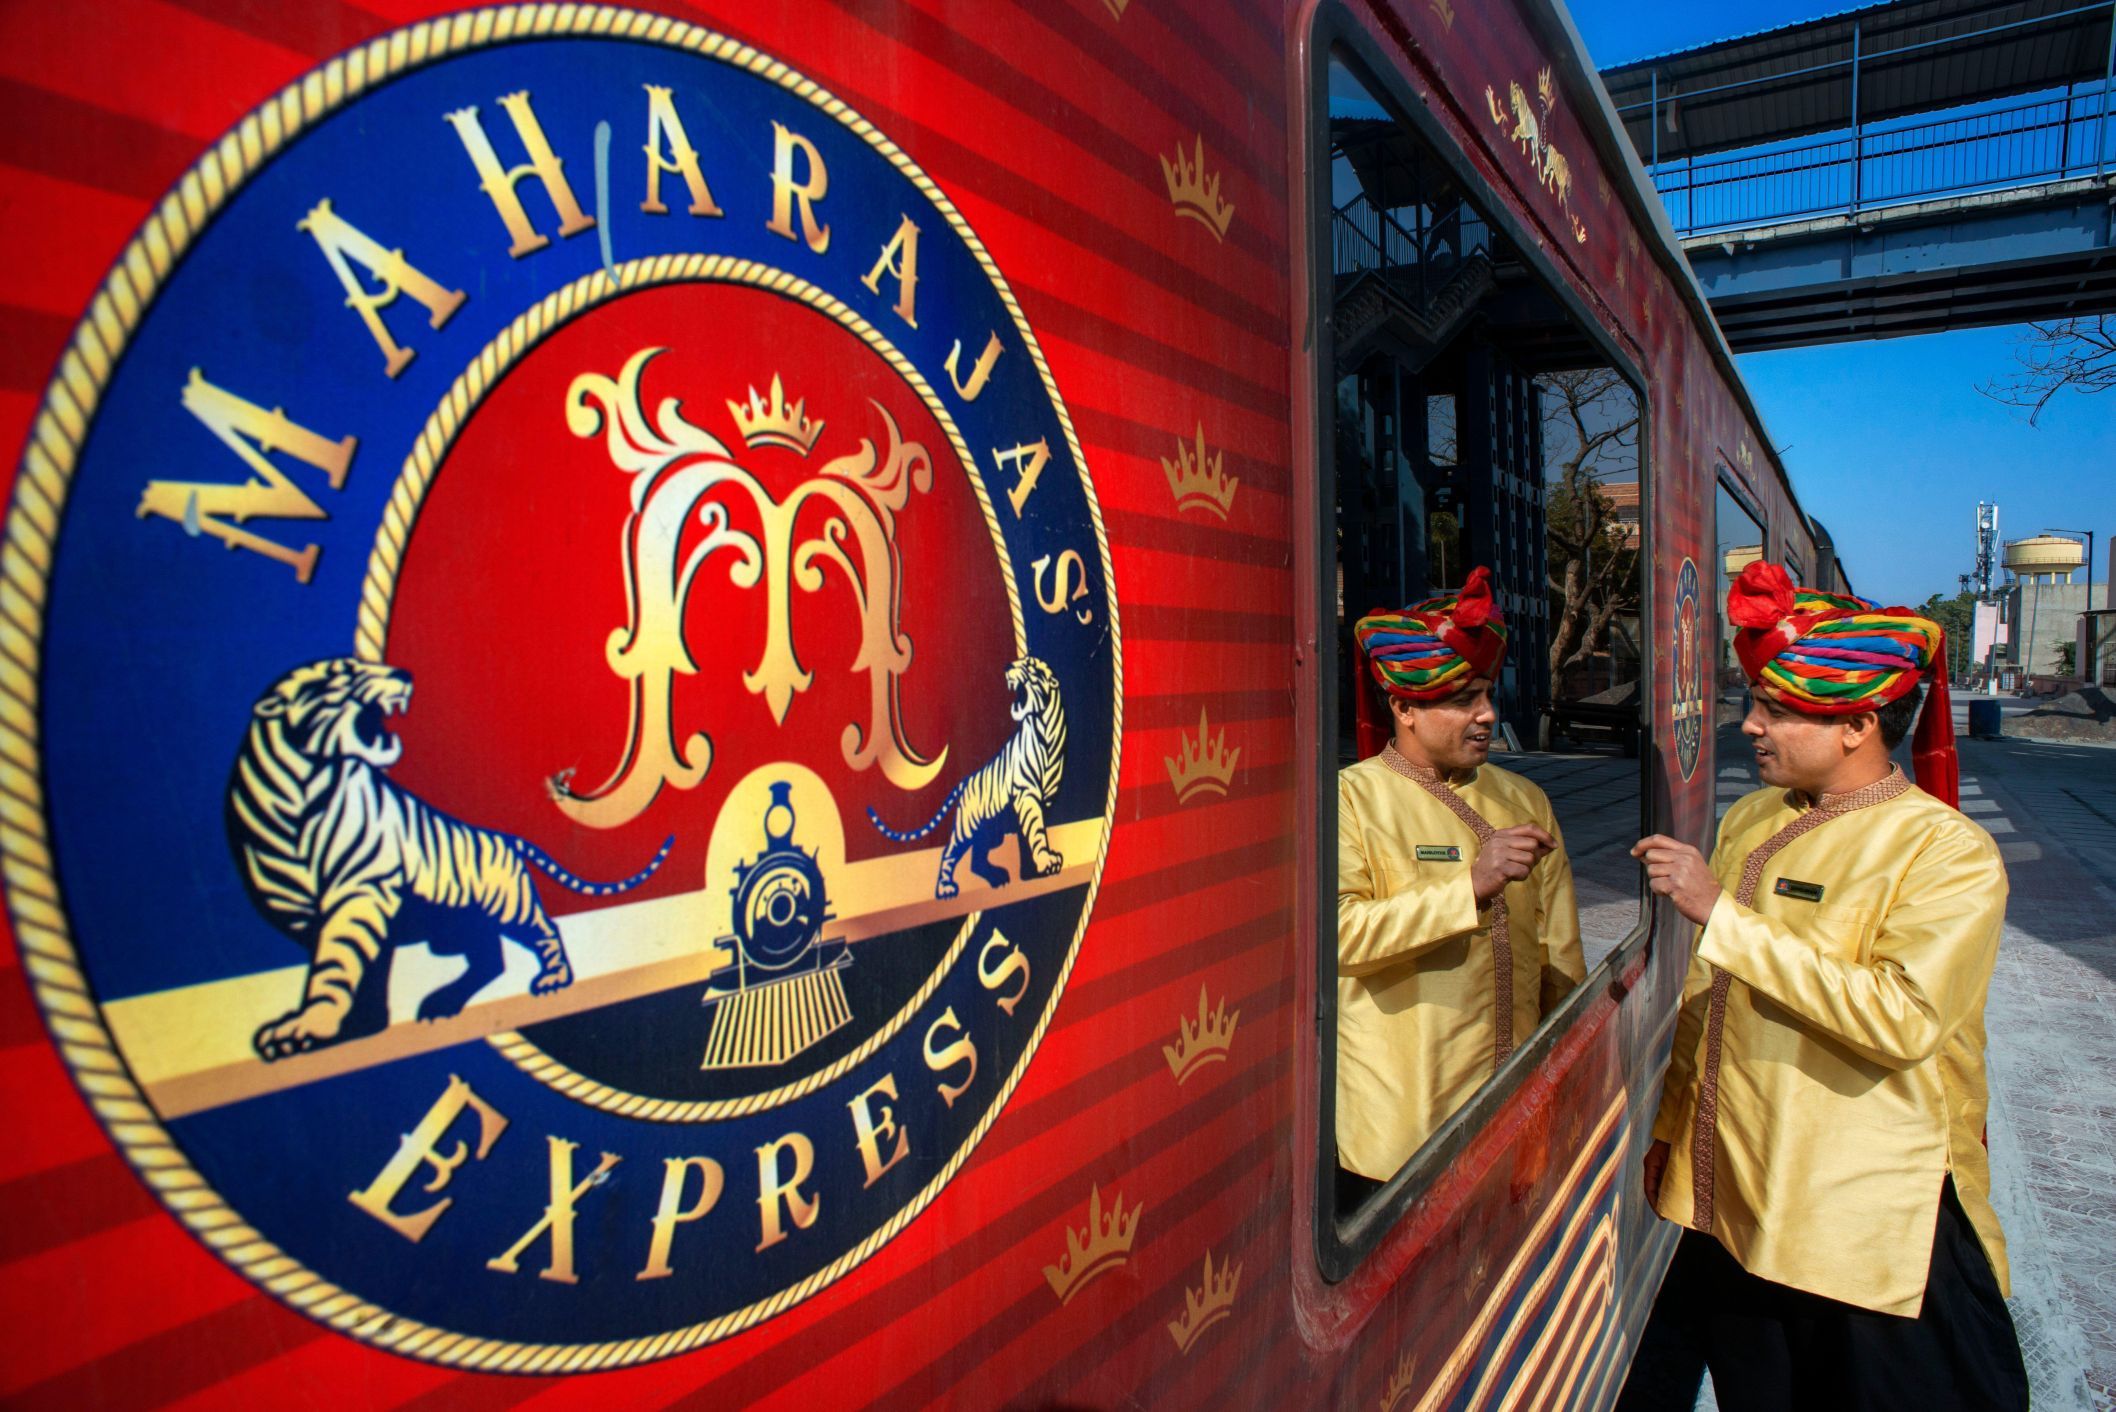  Maharajas-Express.jpg 